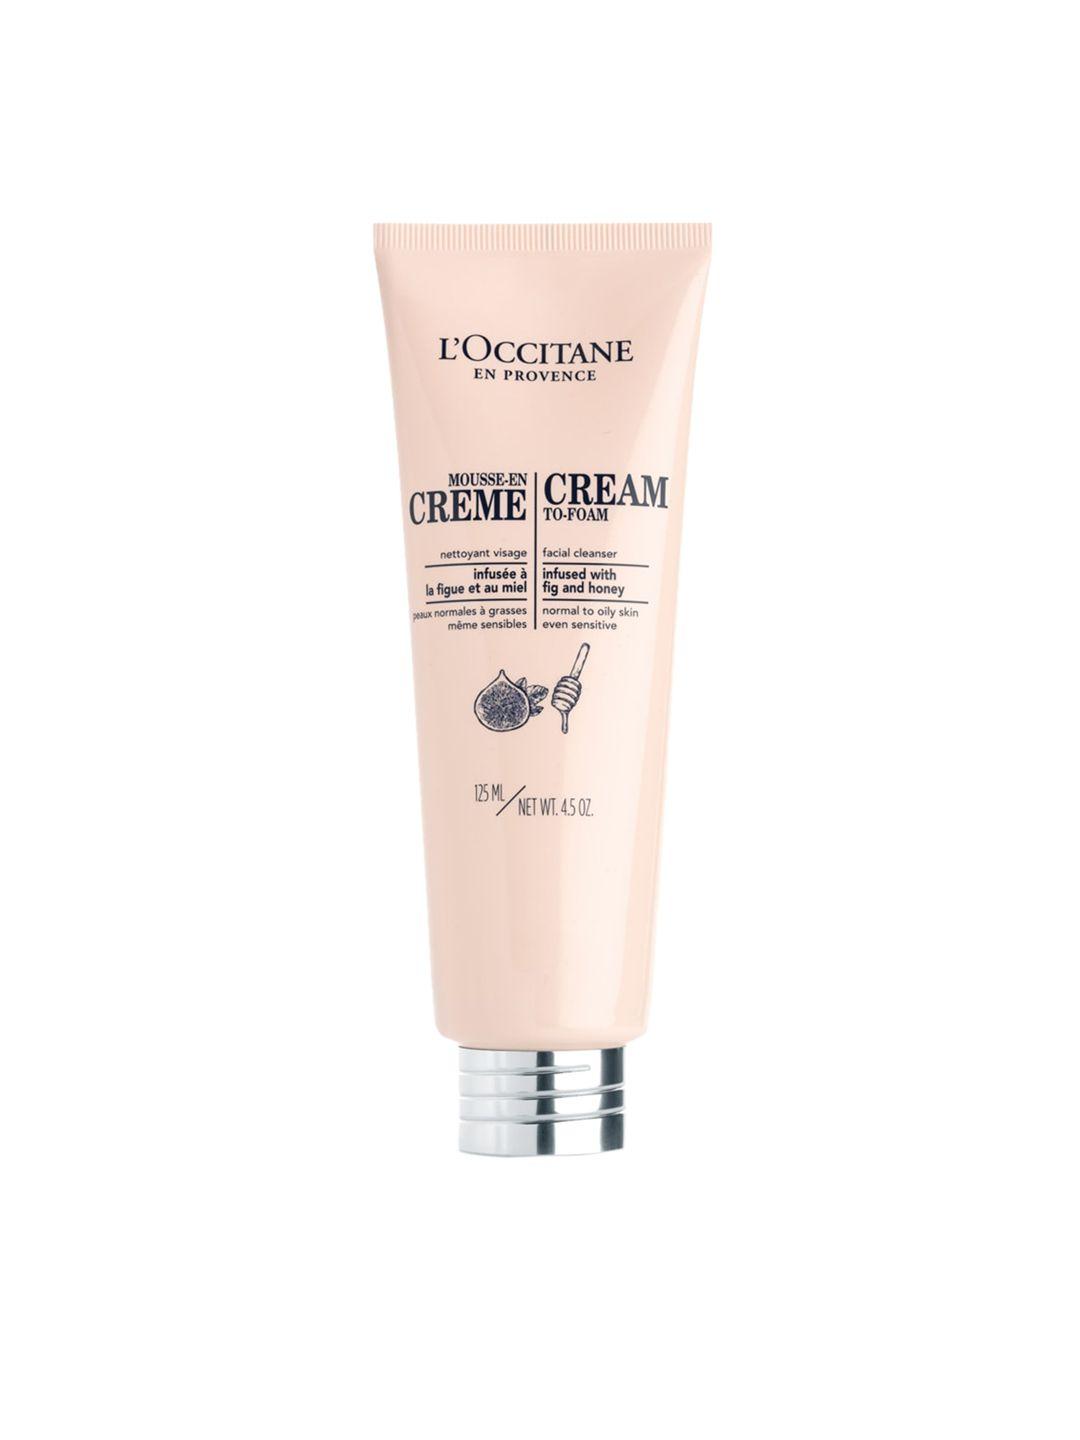 loccitane en provence cream-to-foam face wash - 125 ml